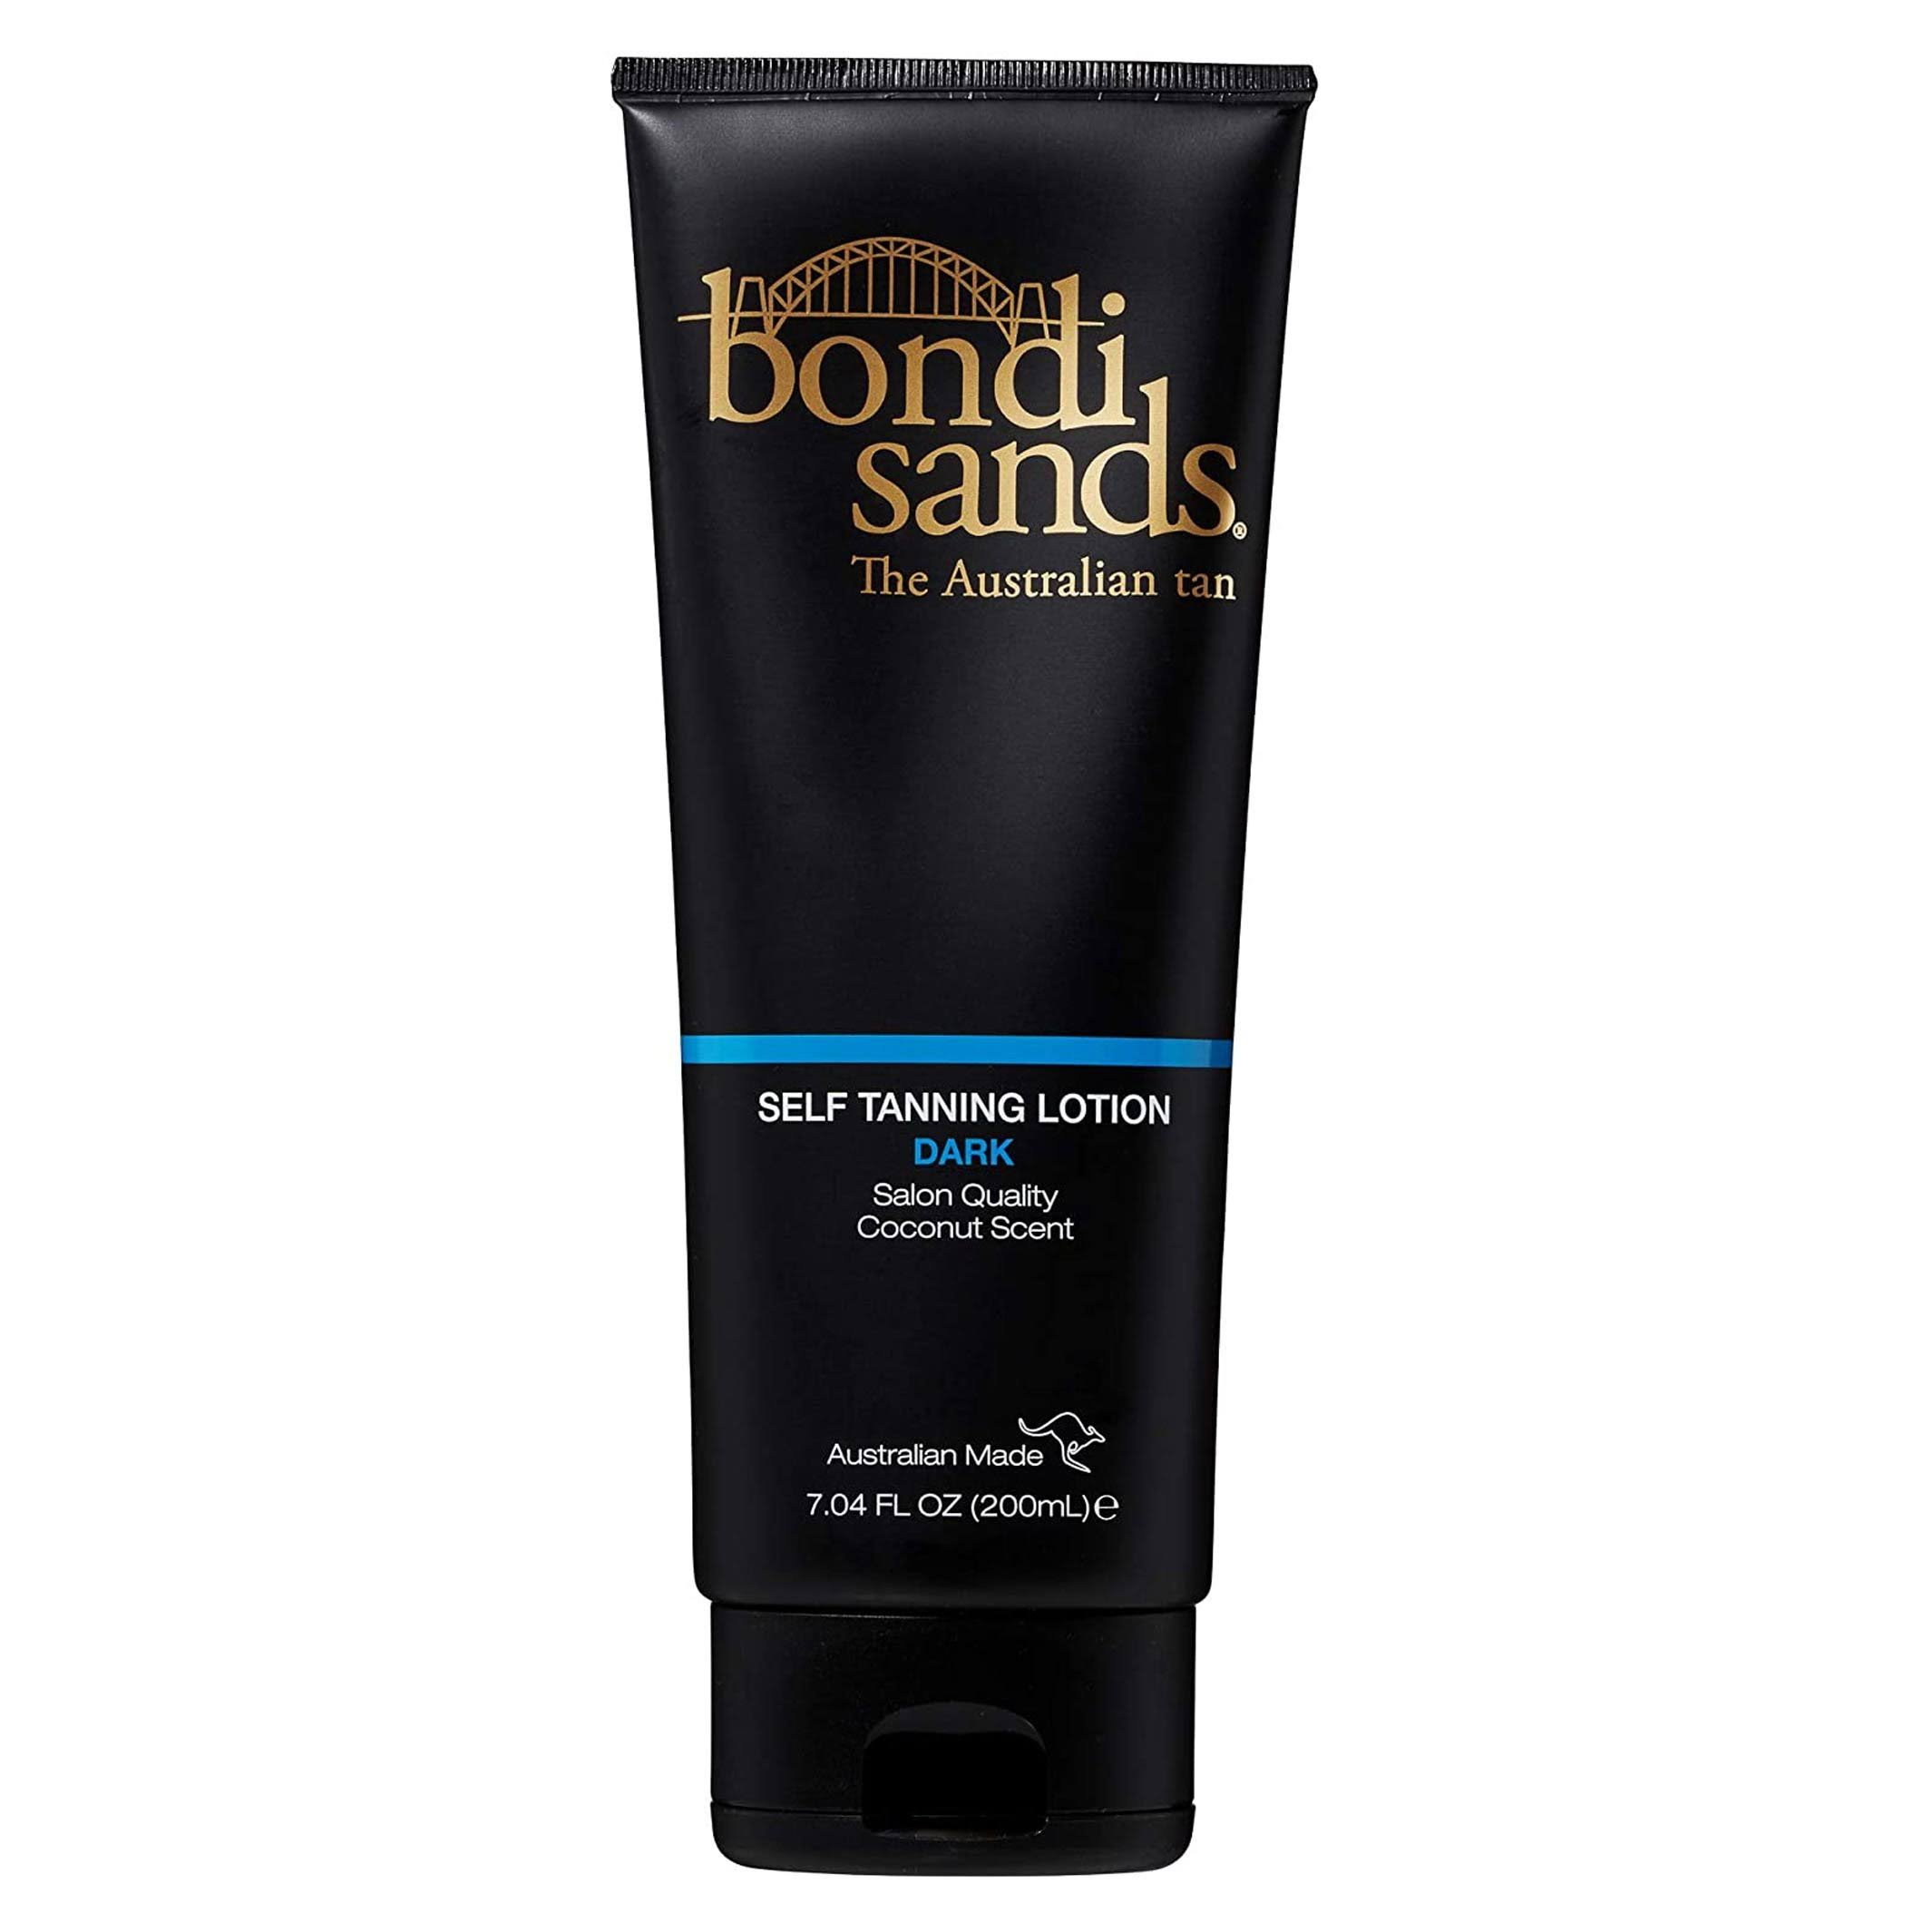 Bondi Sands Self Tanning Lotion - Dark, 200ml